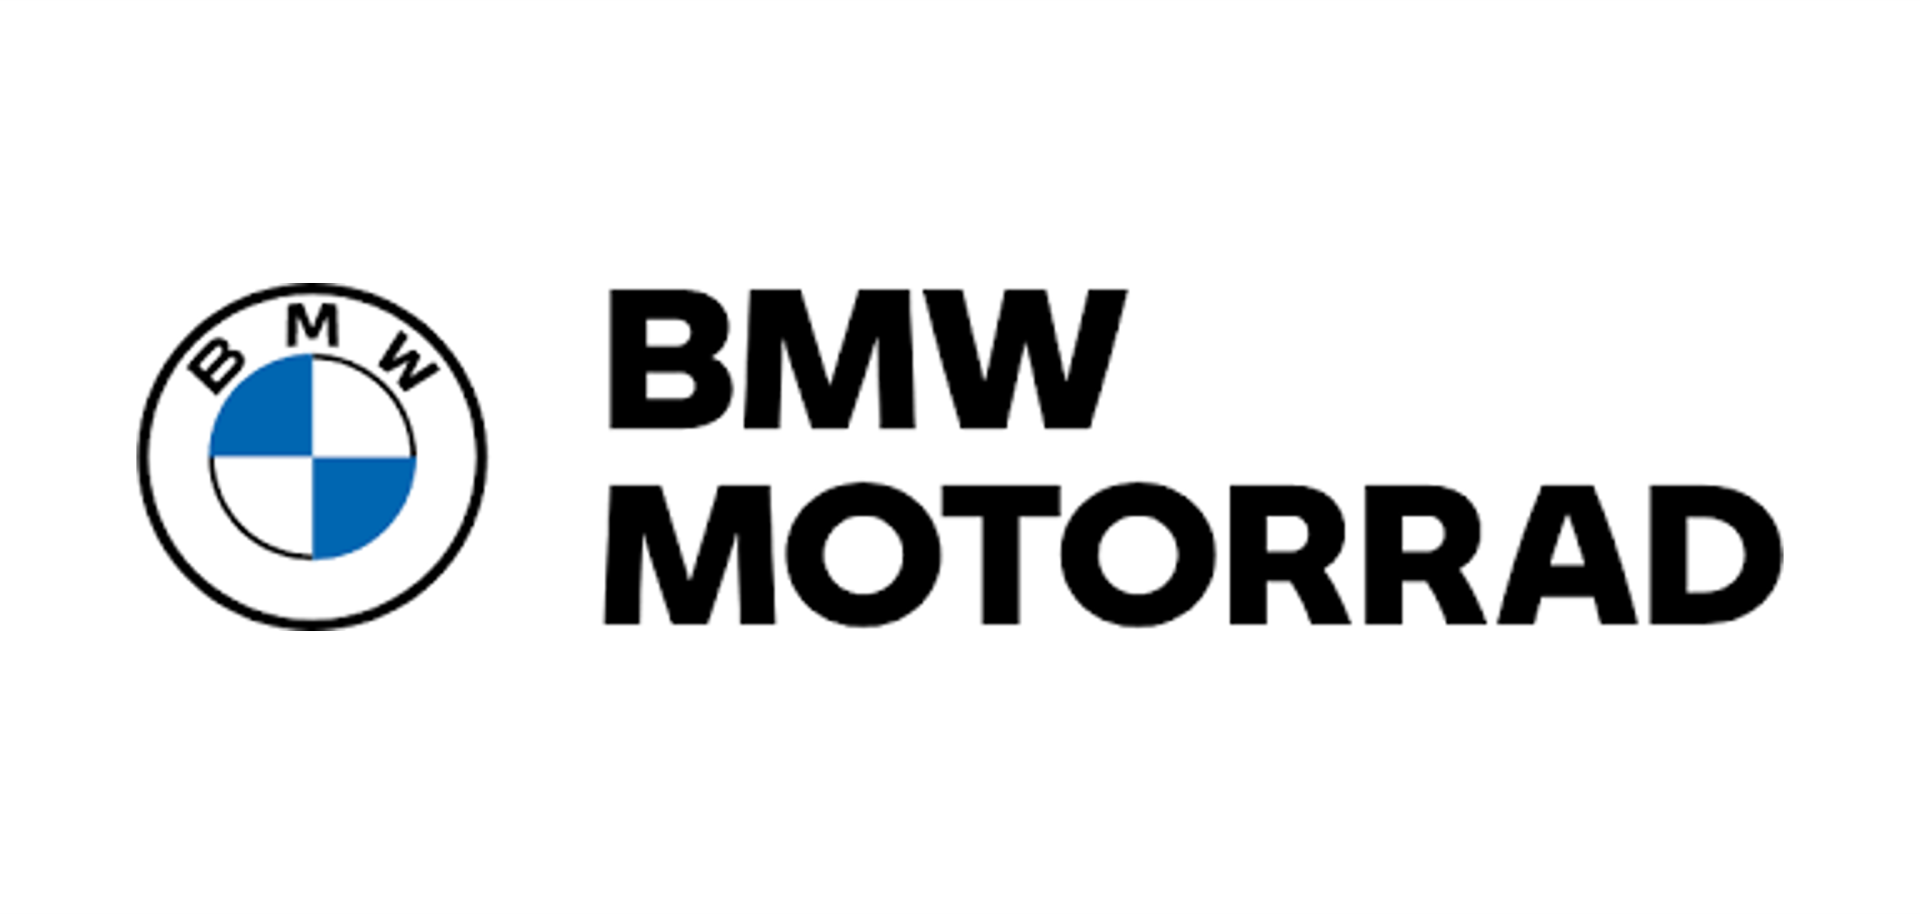 bmw-motorrad-BMW MOTORRAD.png